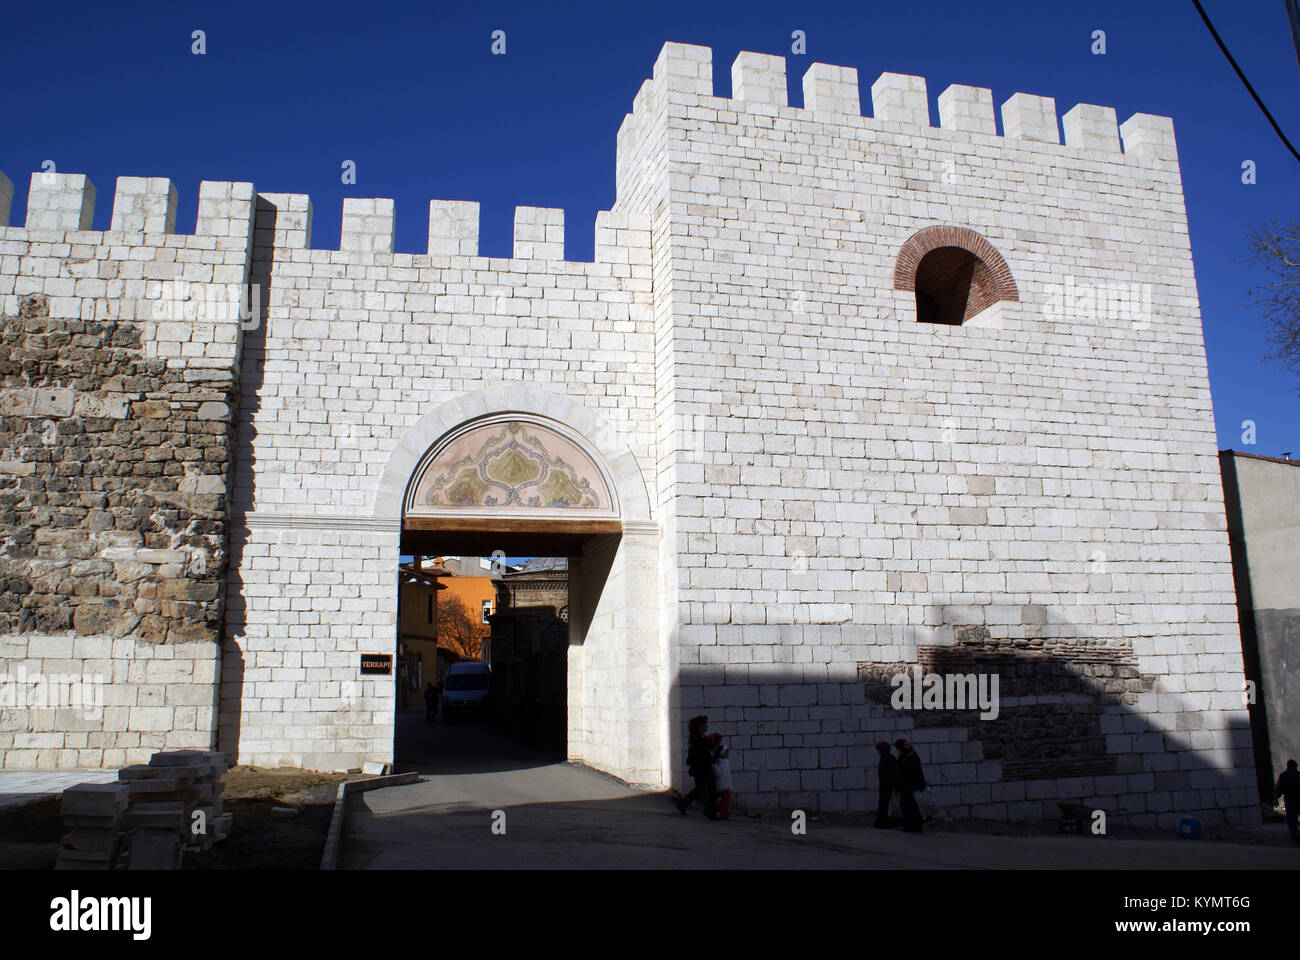 Gate Yerkapi in old town Bursa, Turkey Stock Photo